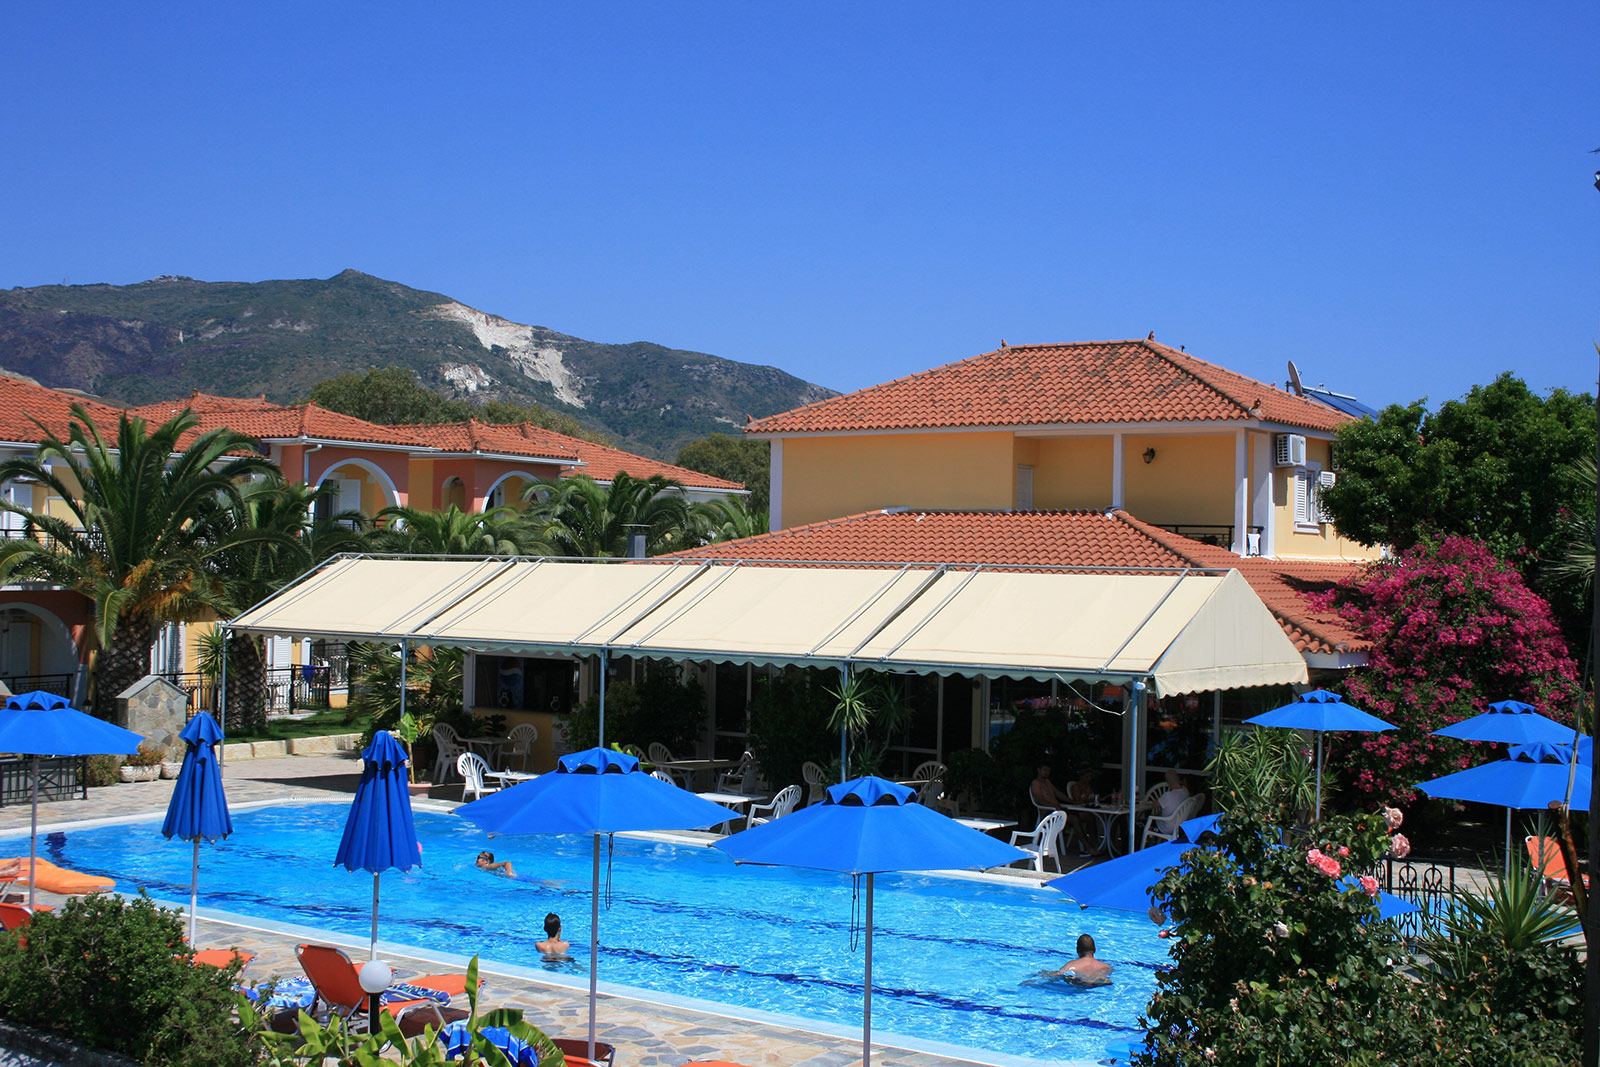 Hotel Metaxa  in kalamaki Zakynthos